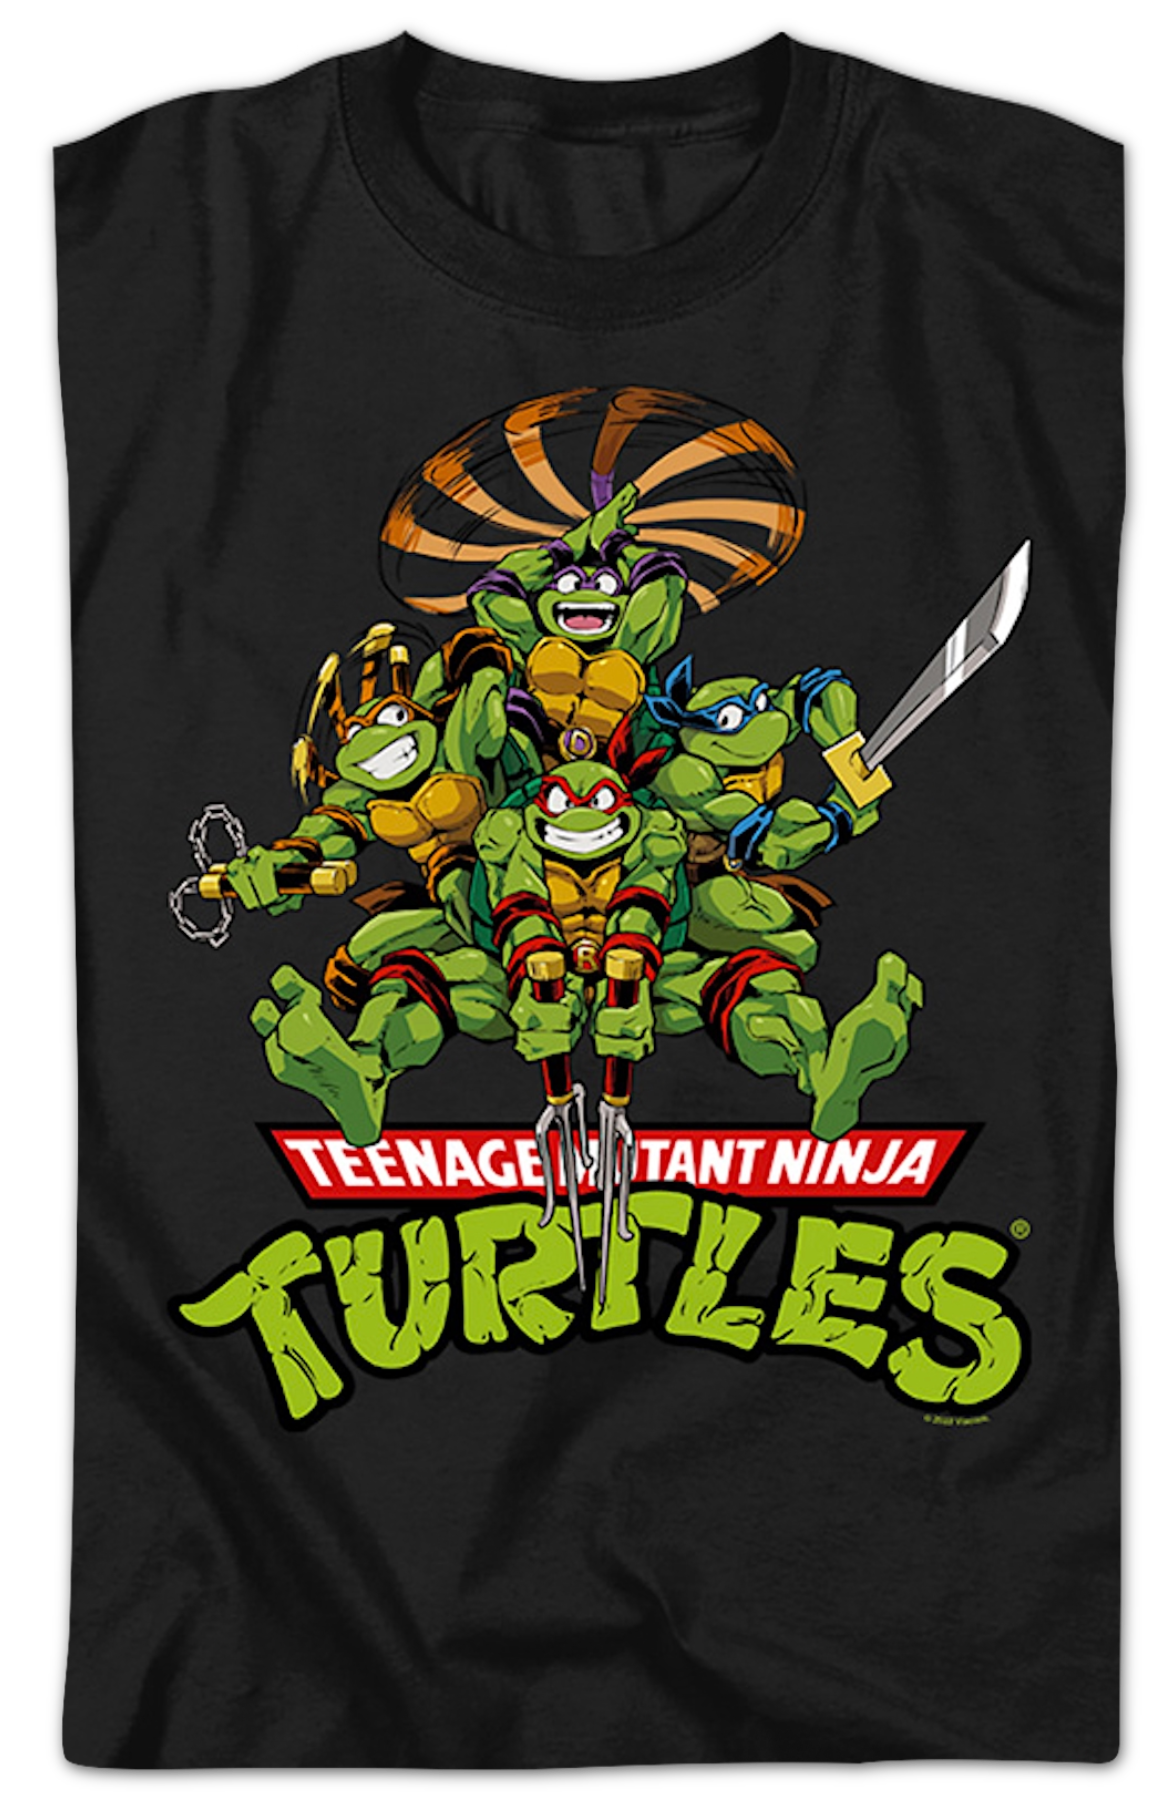 Teenage Mutant Ninja Turtles Leonardo Michelangelo Raphael Toddler Boys 3  Pack T-Shirts White / Gray / Green 2T